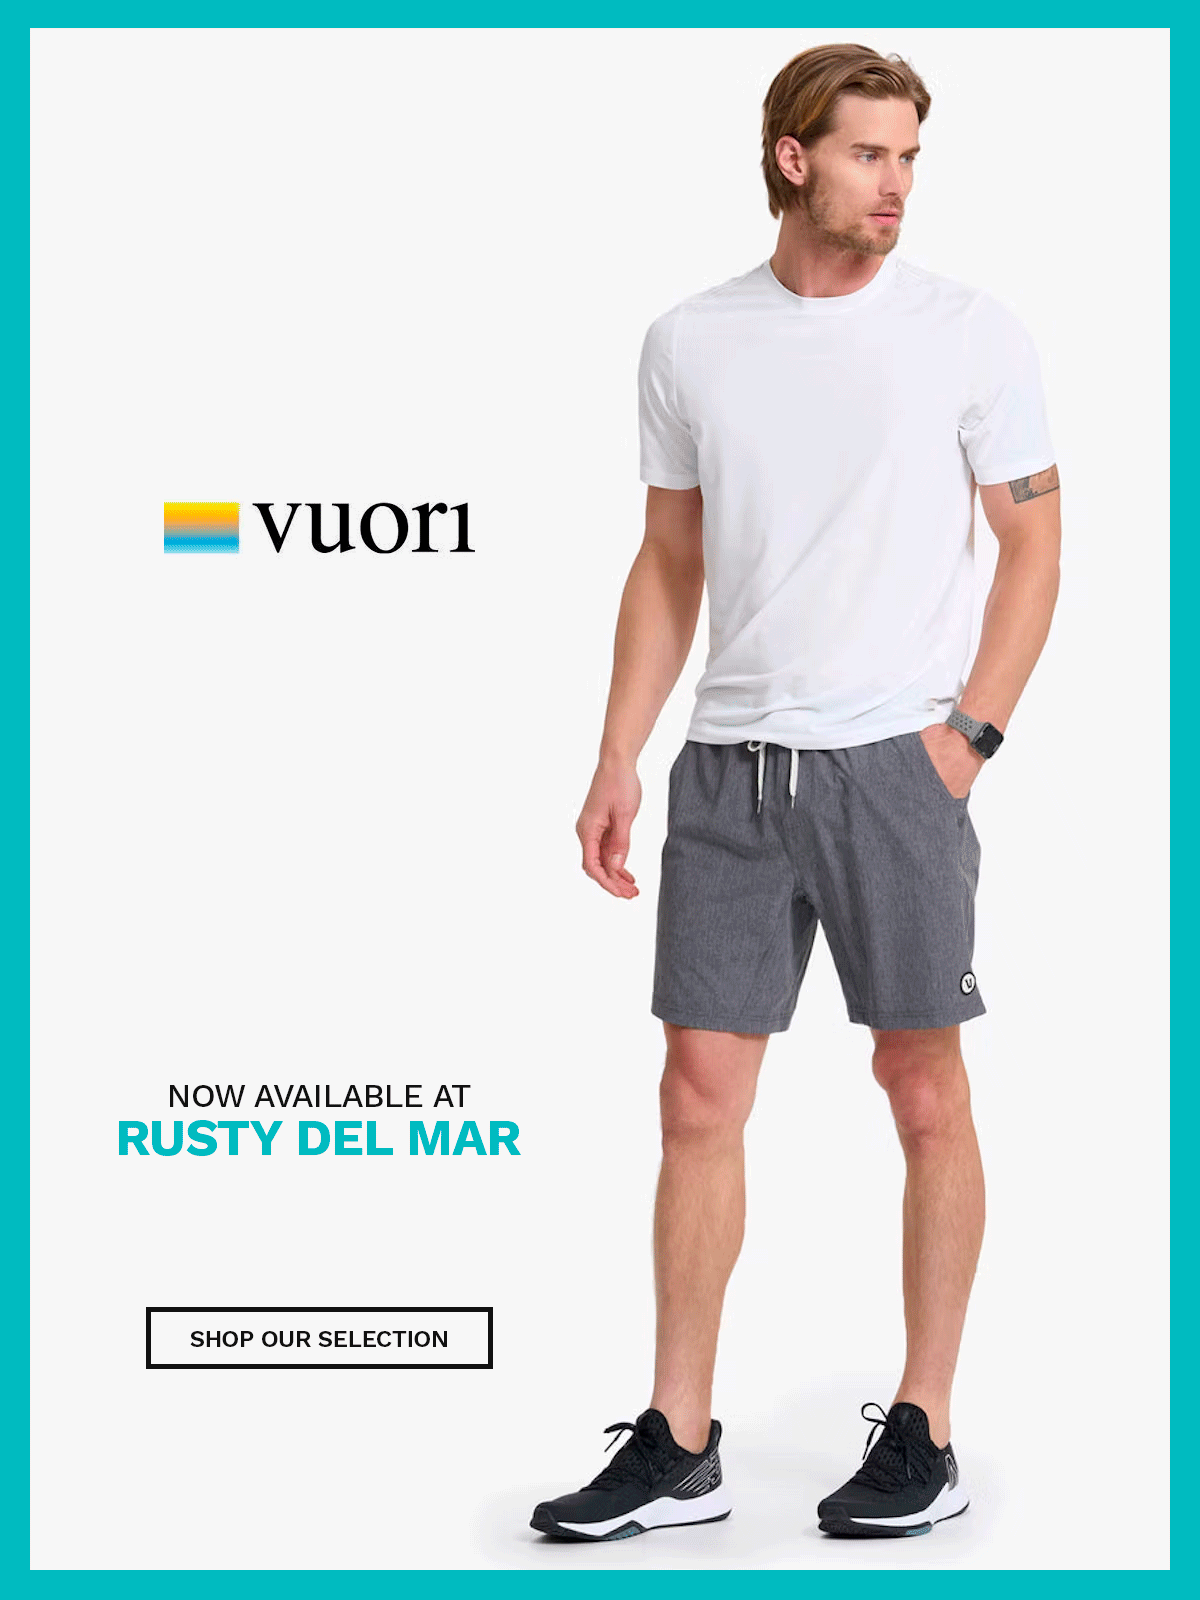 Vuori Activewear available at Rusty Del Mar